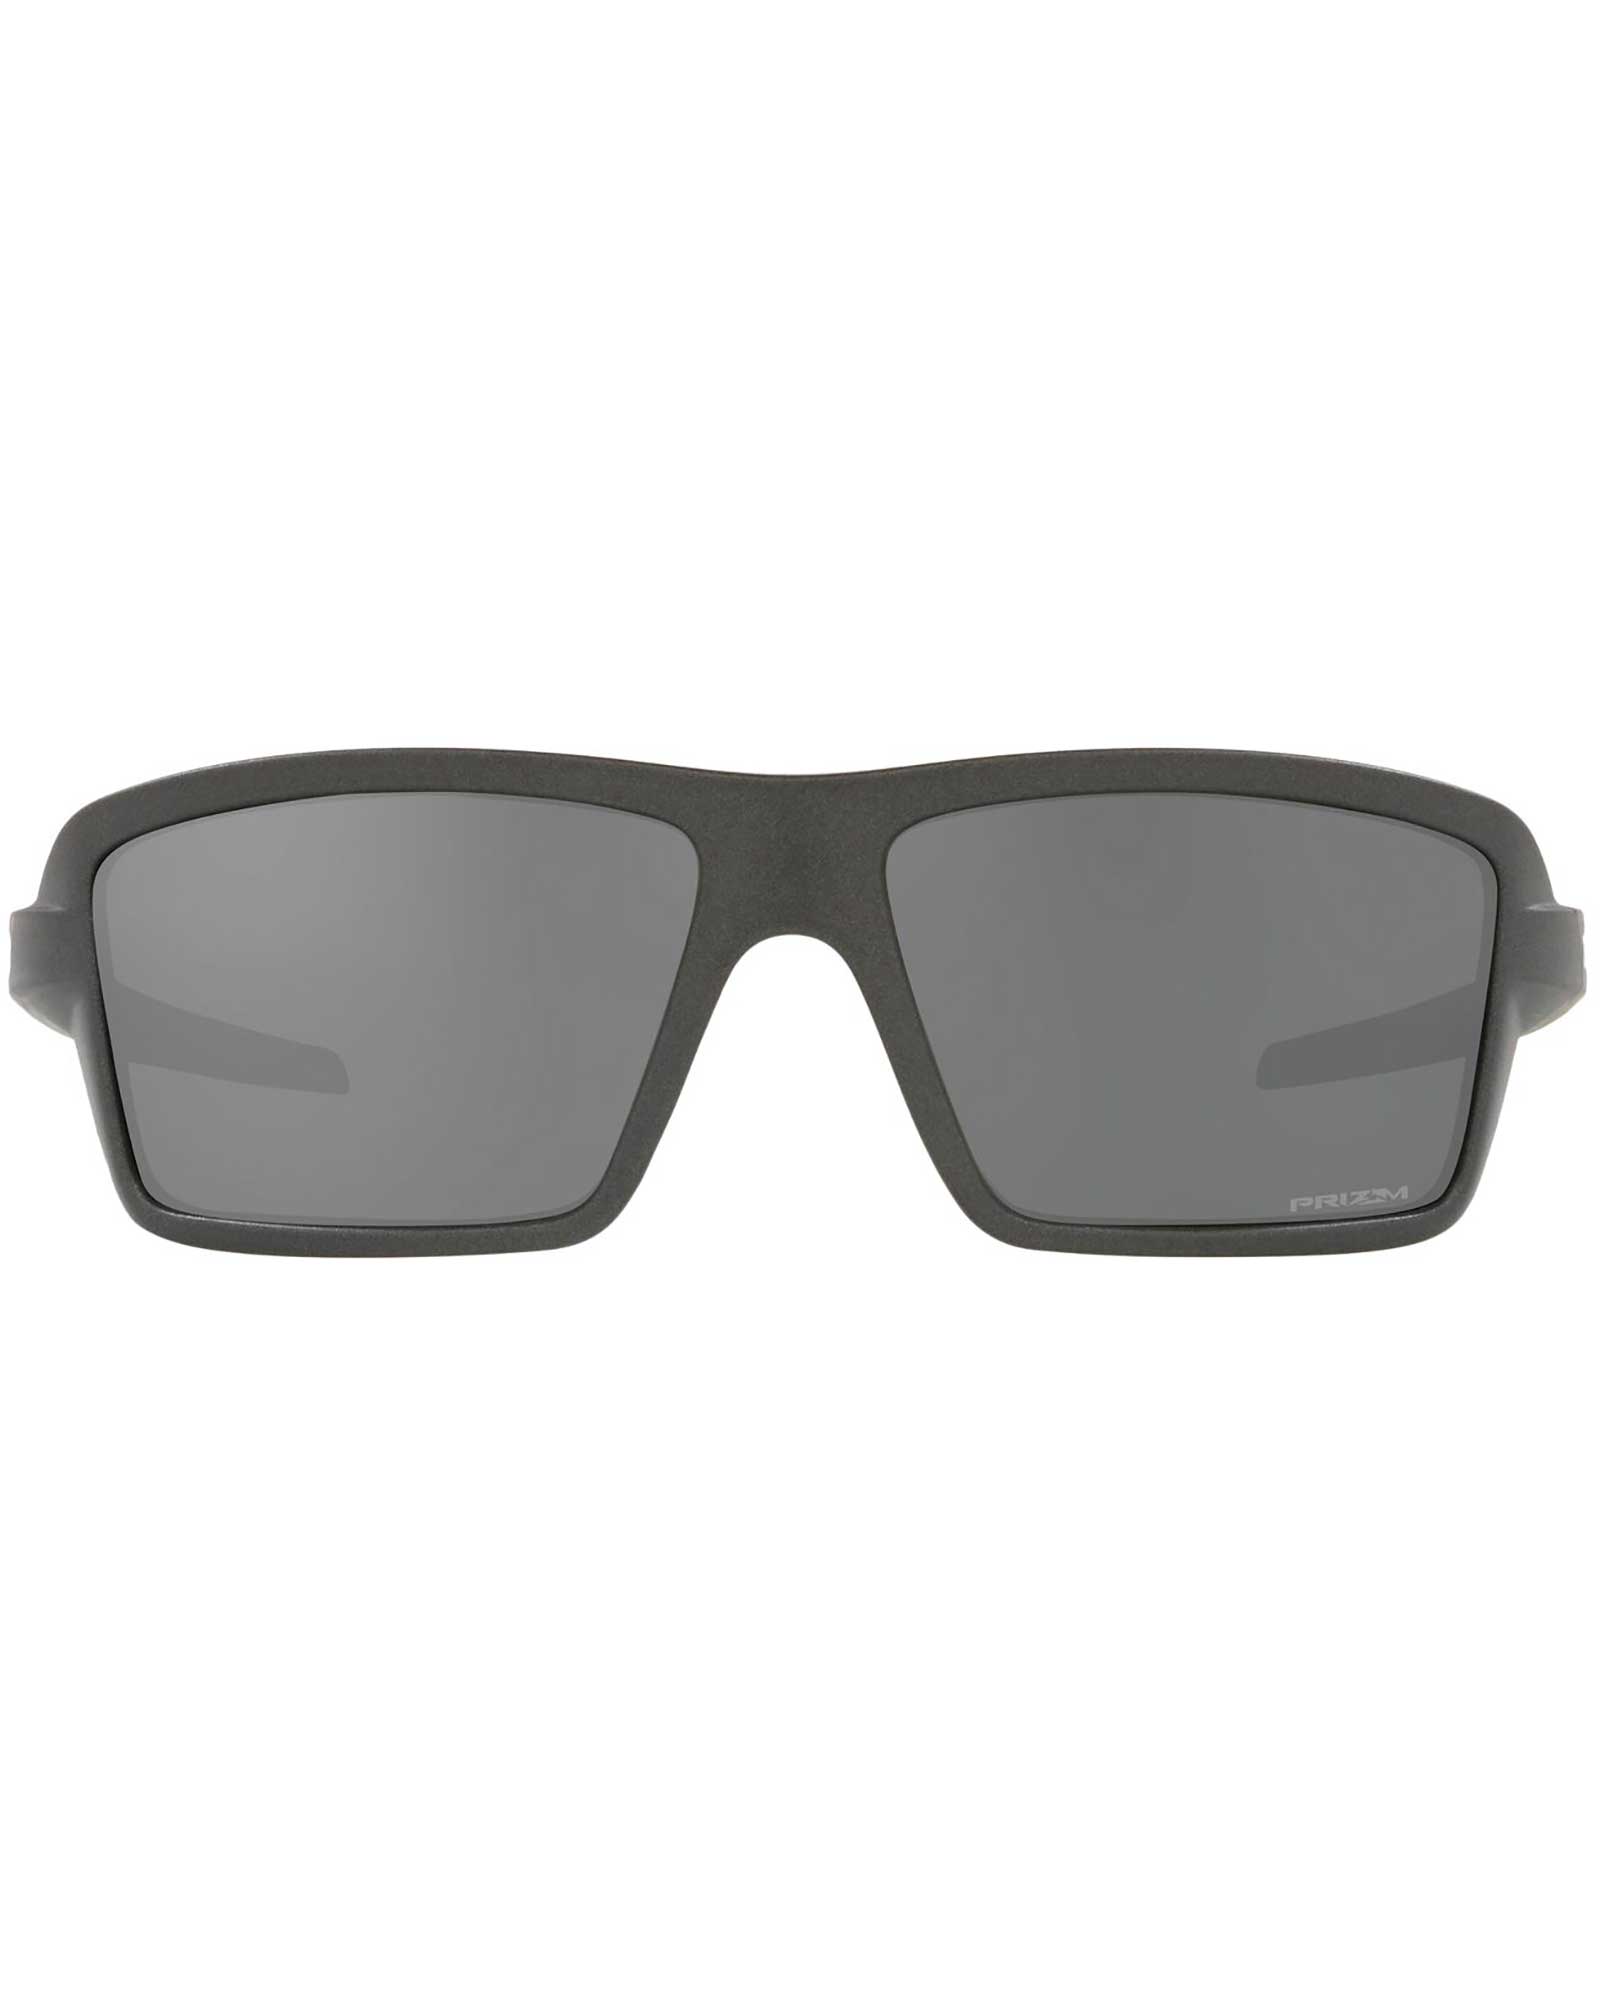 Oakley Cables Steel / Prizm Black Sunglasses - Steel